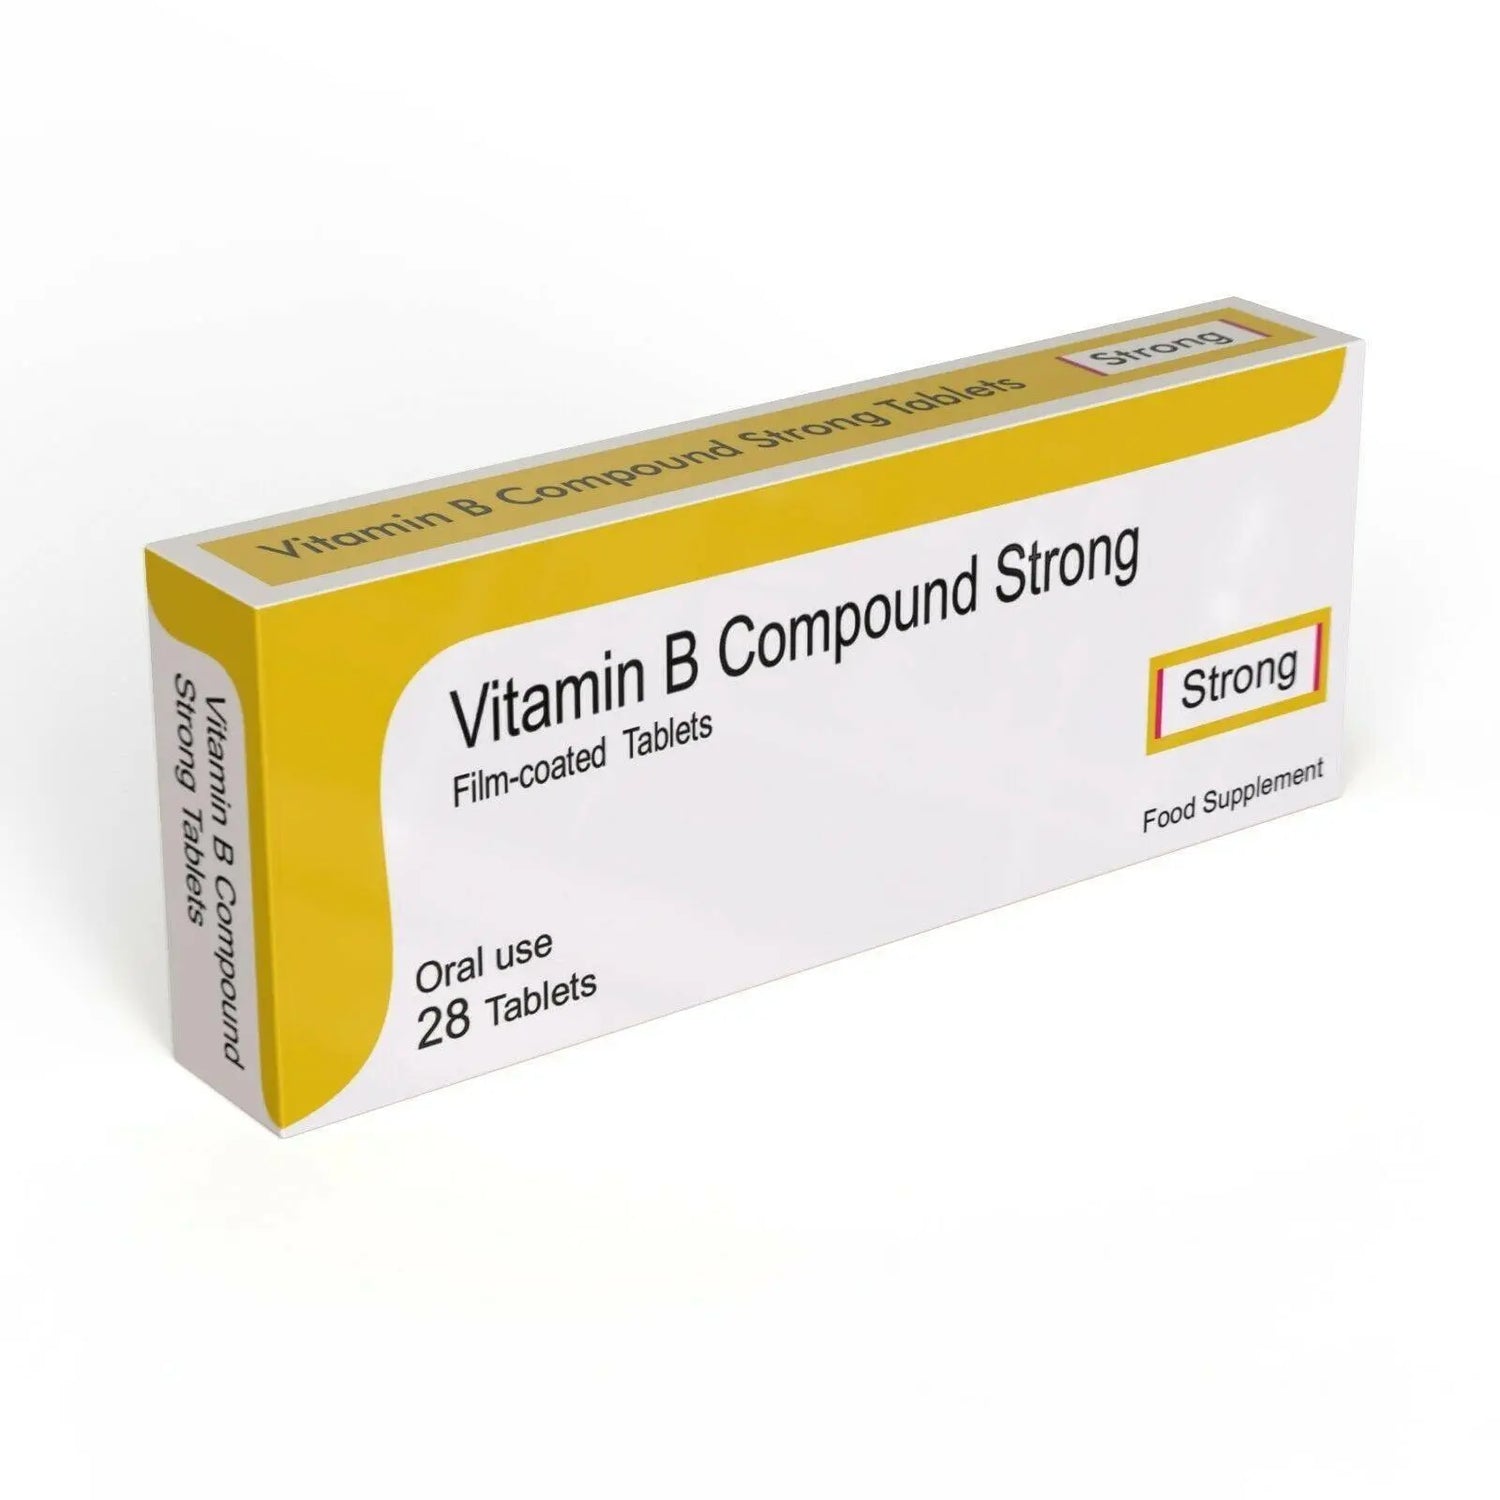 Vitamin B Compound Strong 28 tablets - Arc Health Nutrition UK Ltd 